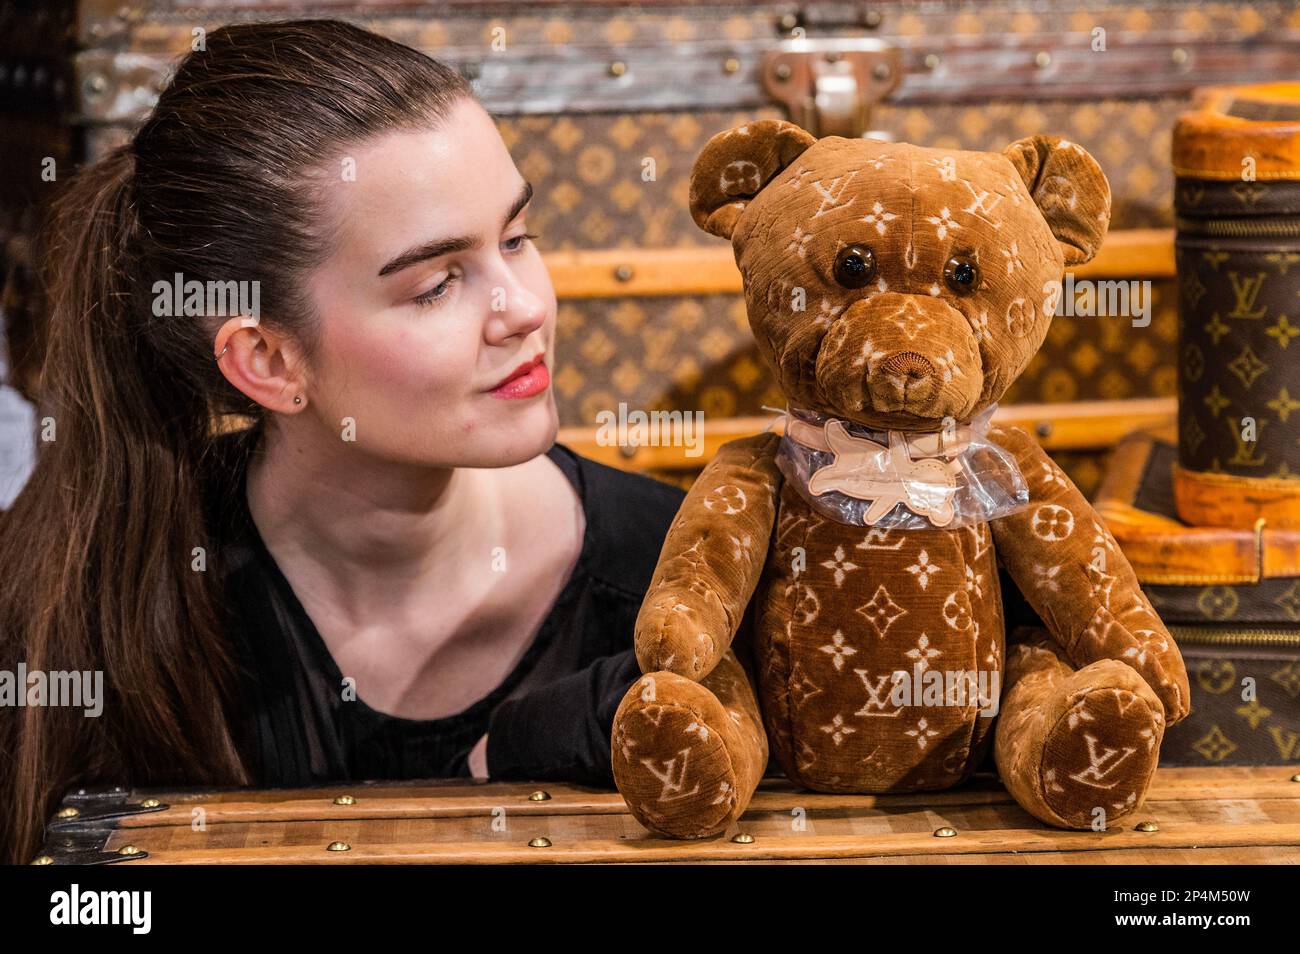 Louis Vuitton Bear DouDou Limited Edition Rare